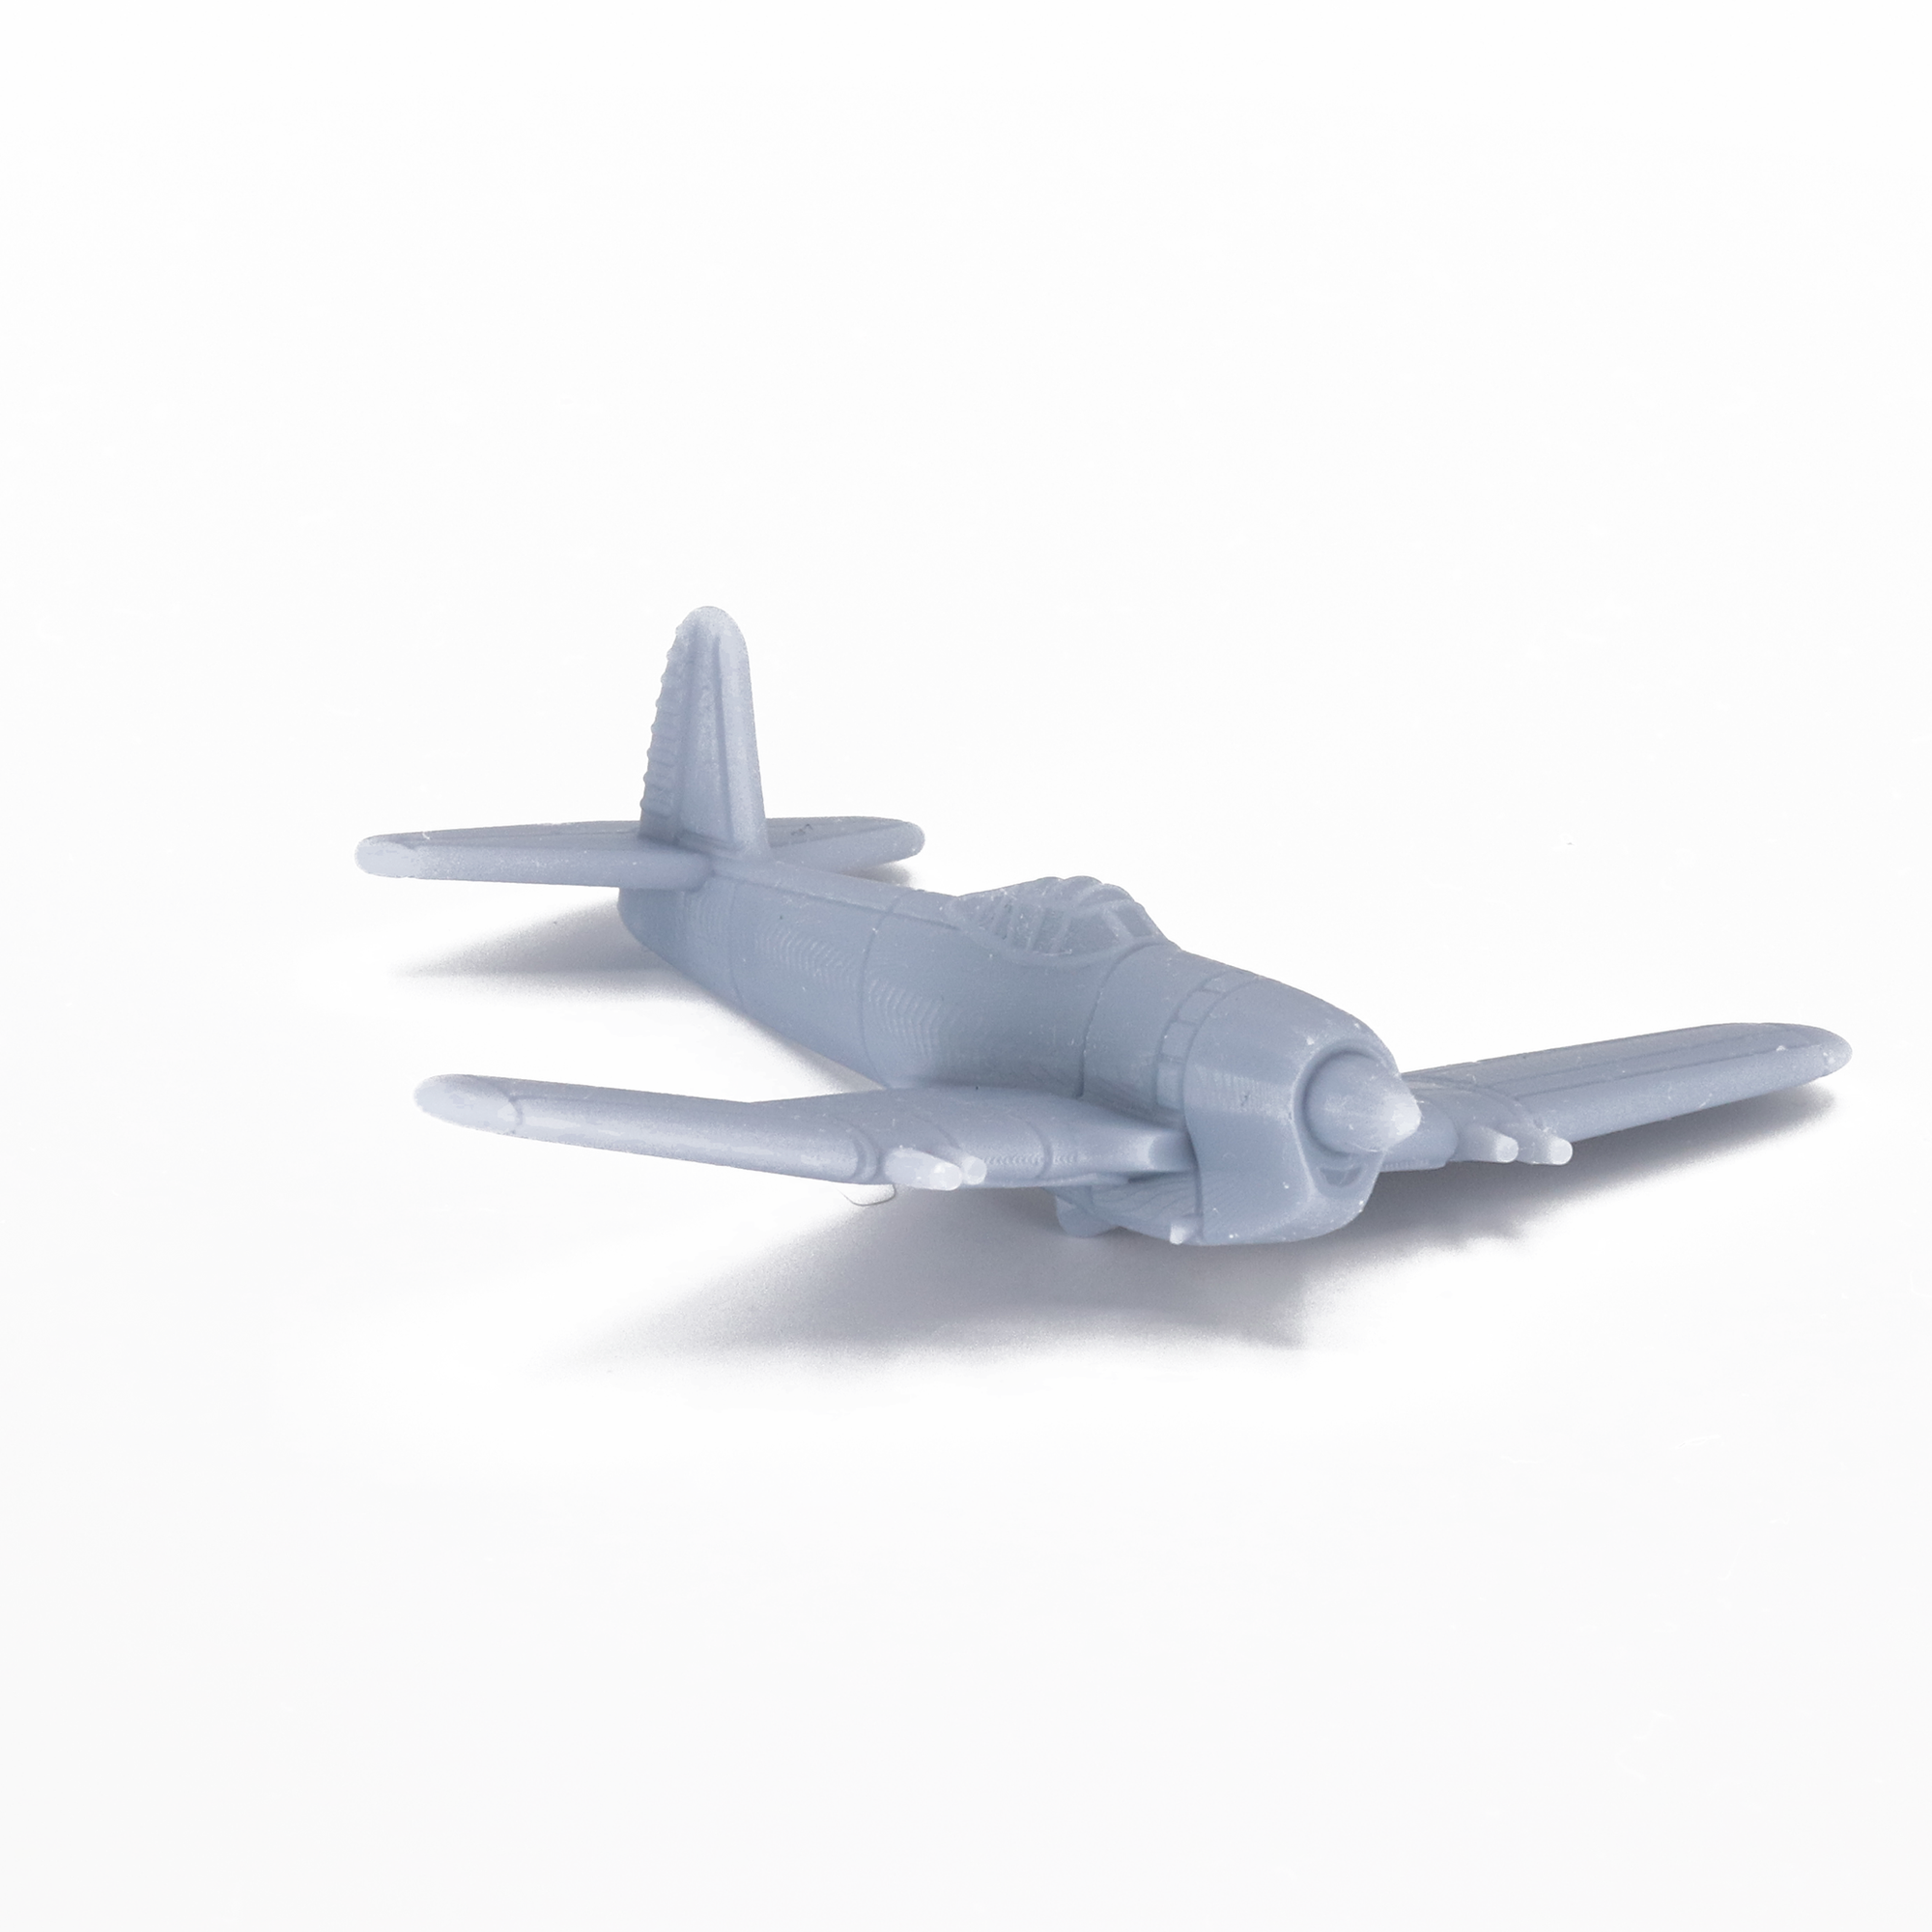 Grumman XF5F Skyrocket (Early)